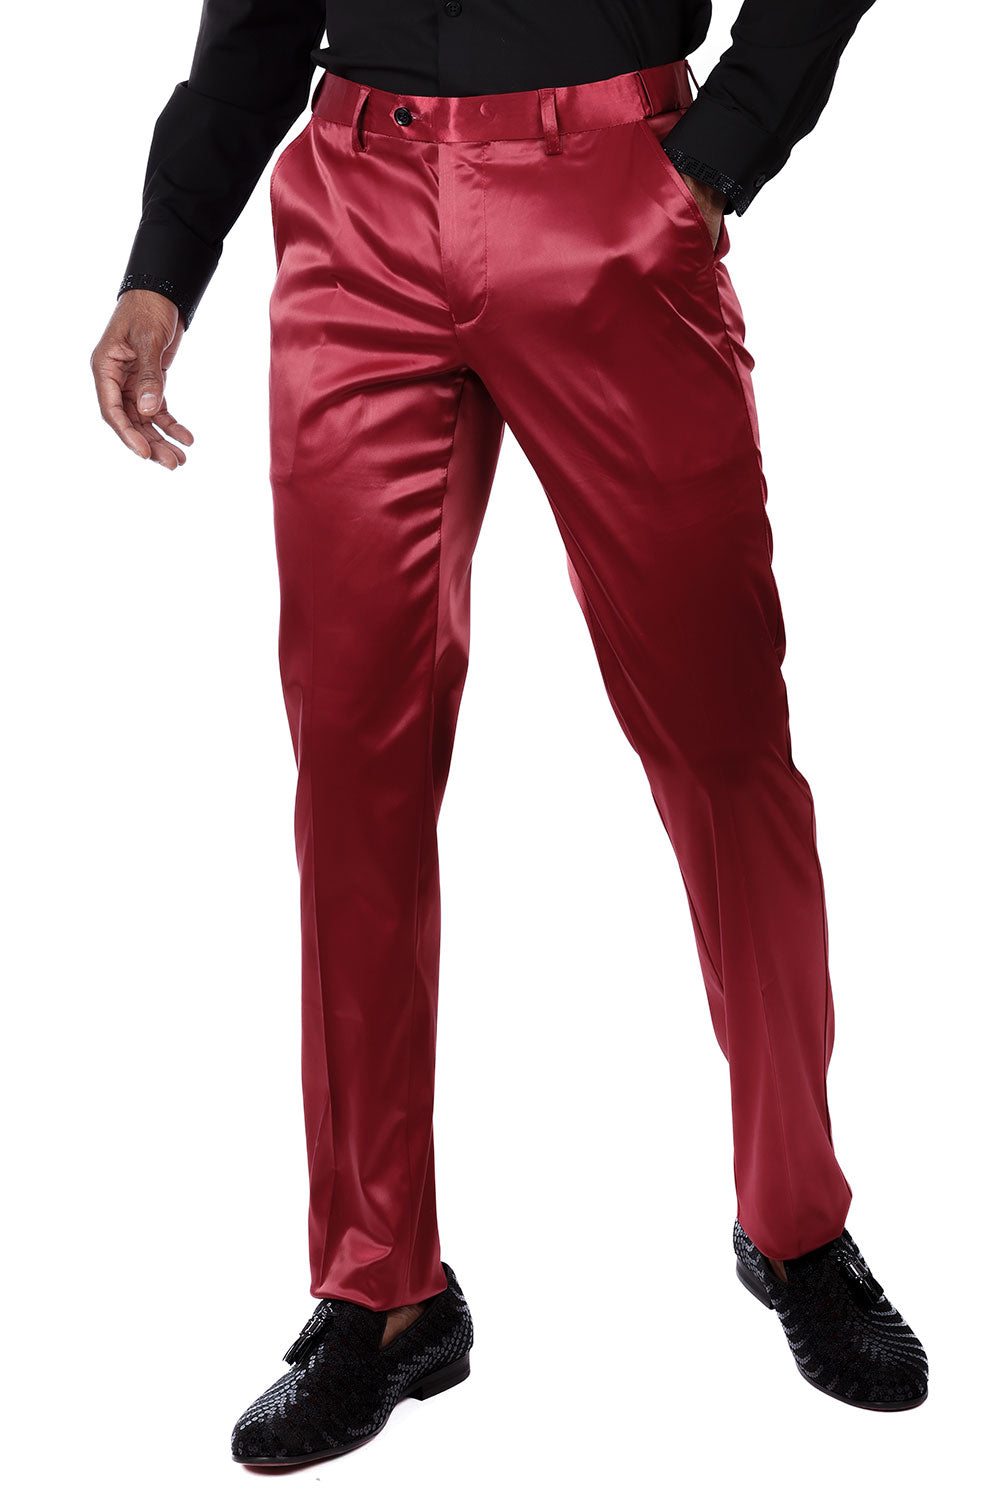 INCERUN Men's Coated Shiny Stretch Trousers Sliver Feel Elegant Pants -  Walmart.com